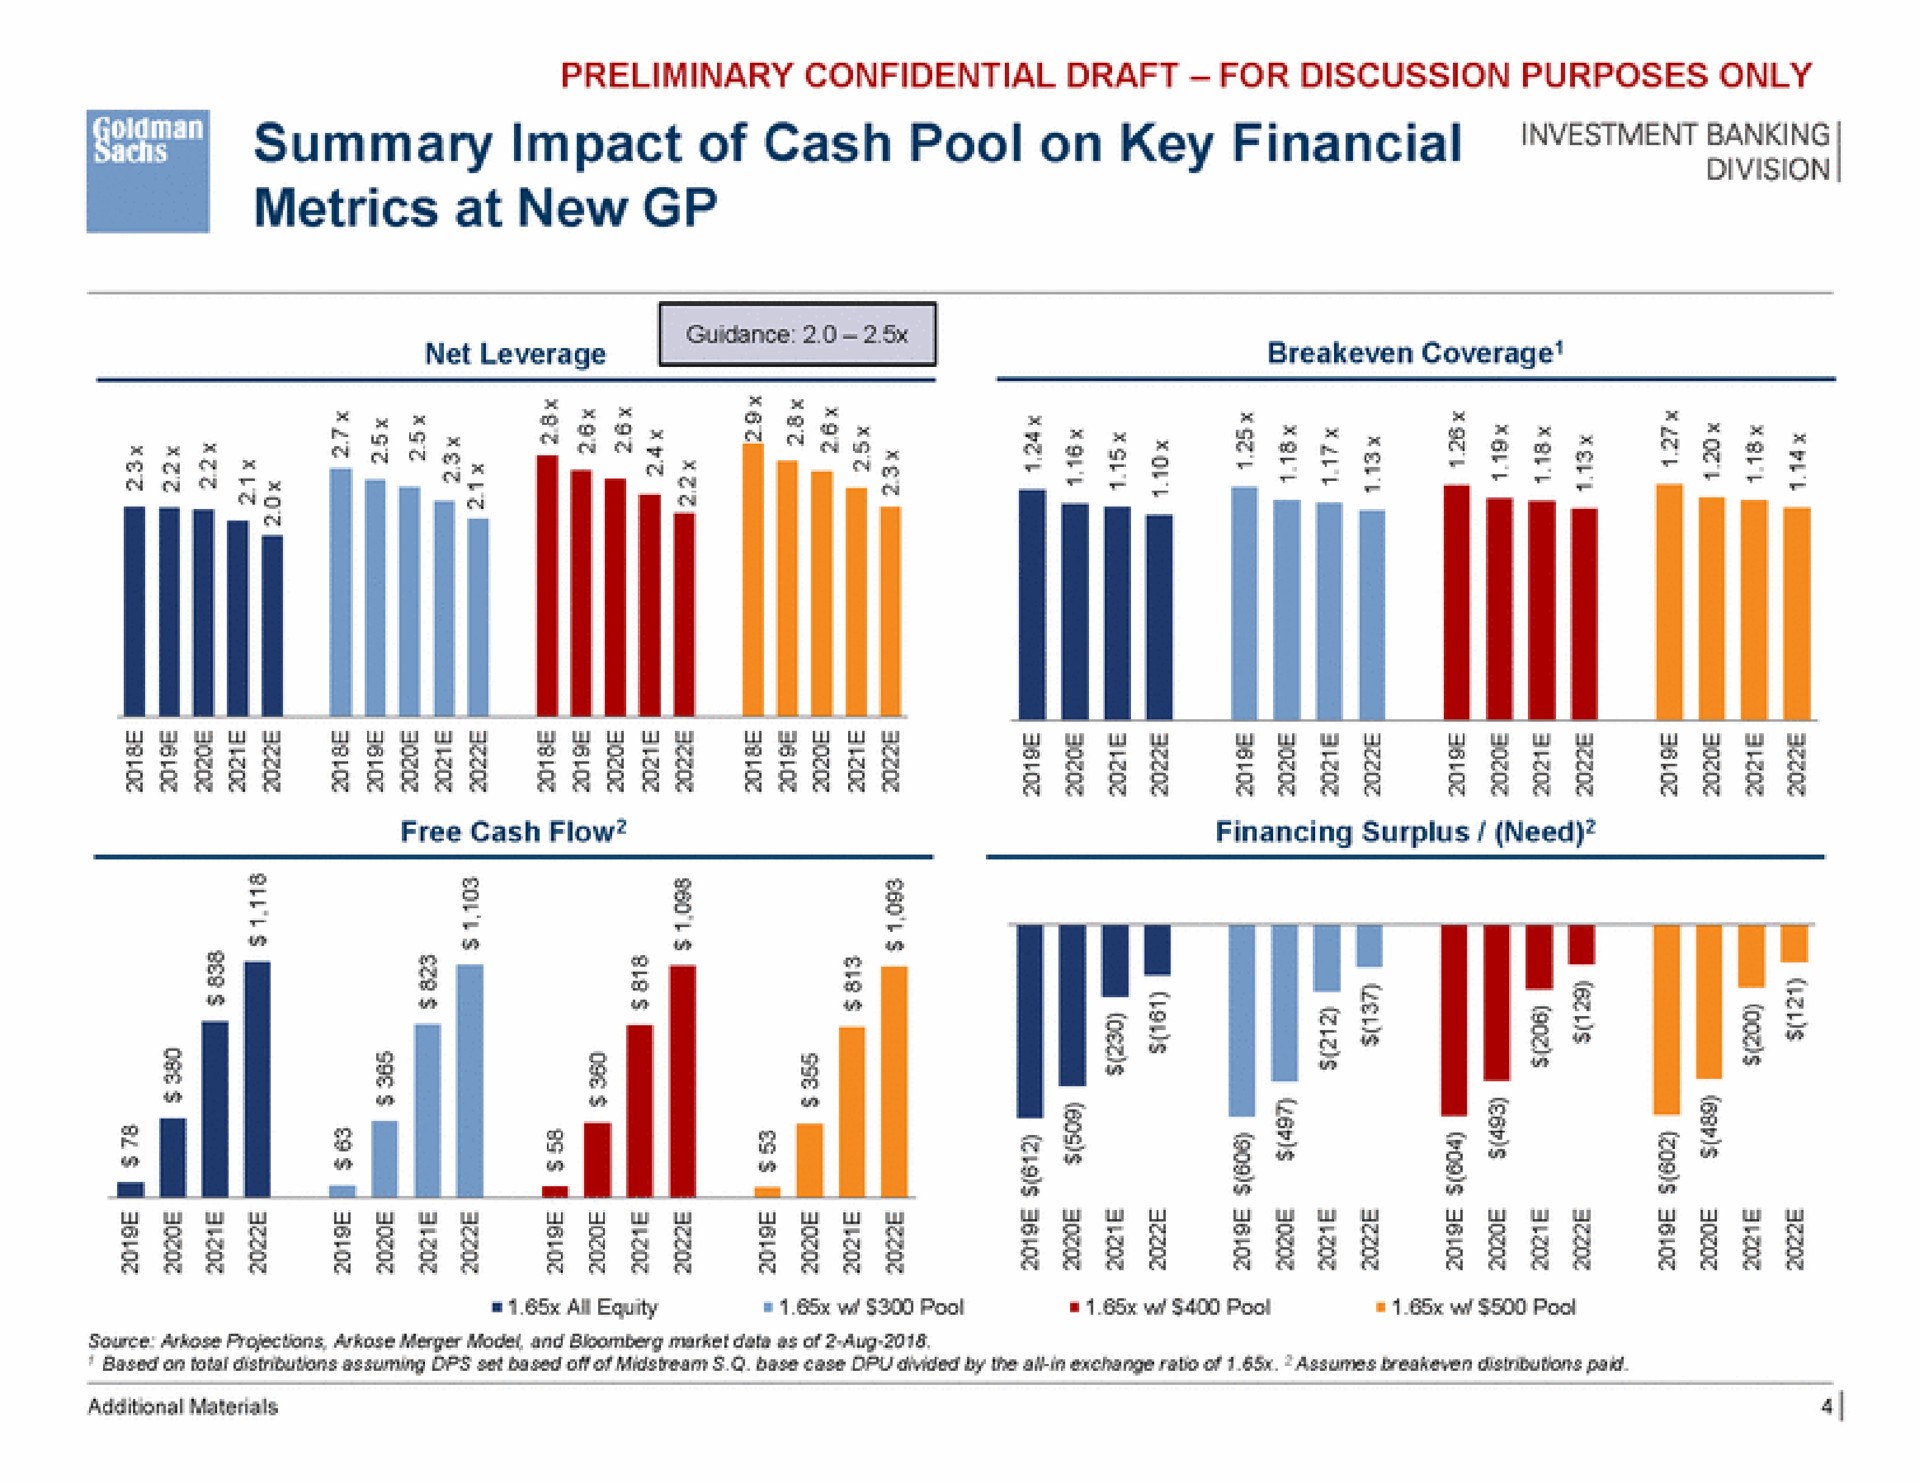 sen summary impact of cash pool on key financial metrics at new cot a yee esses | Goldman Sachs